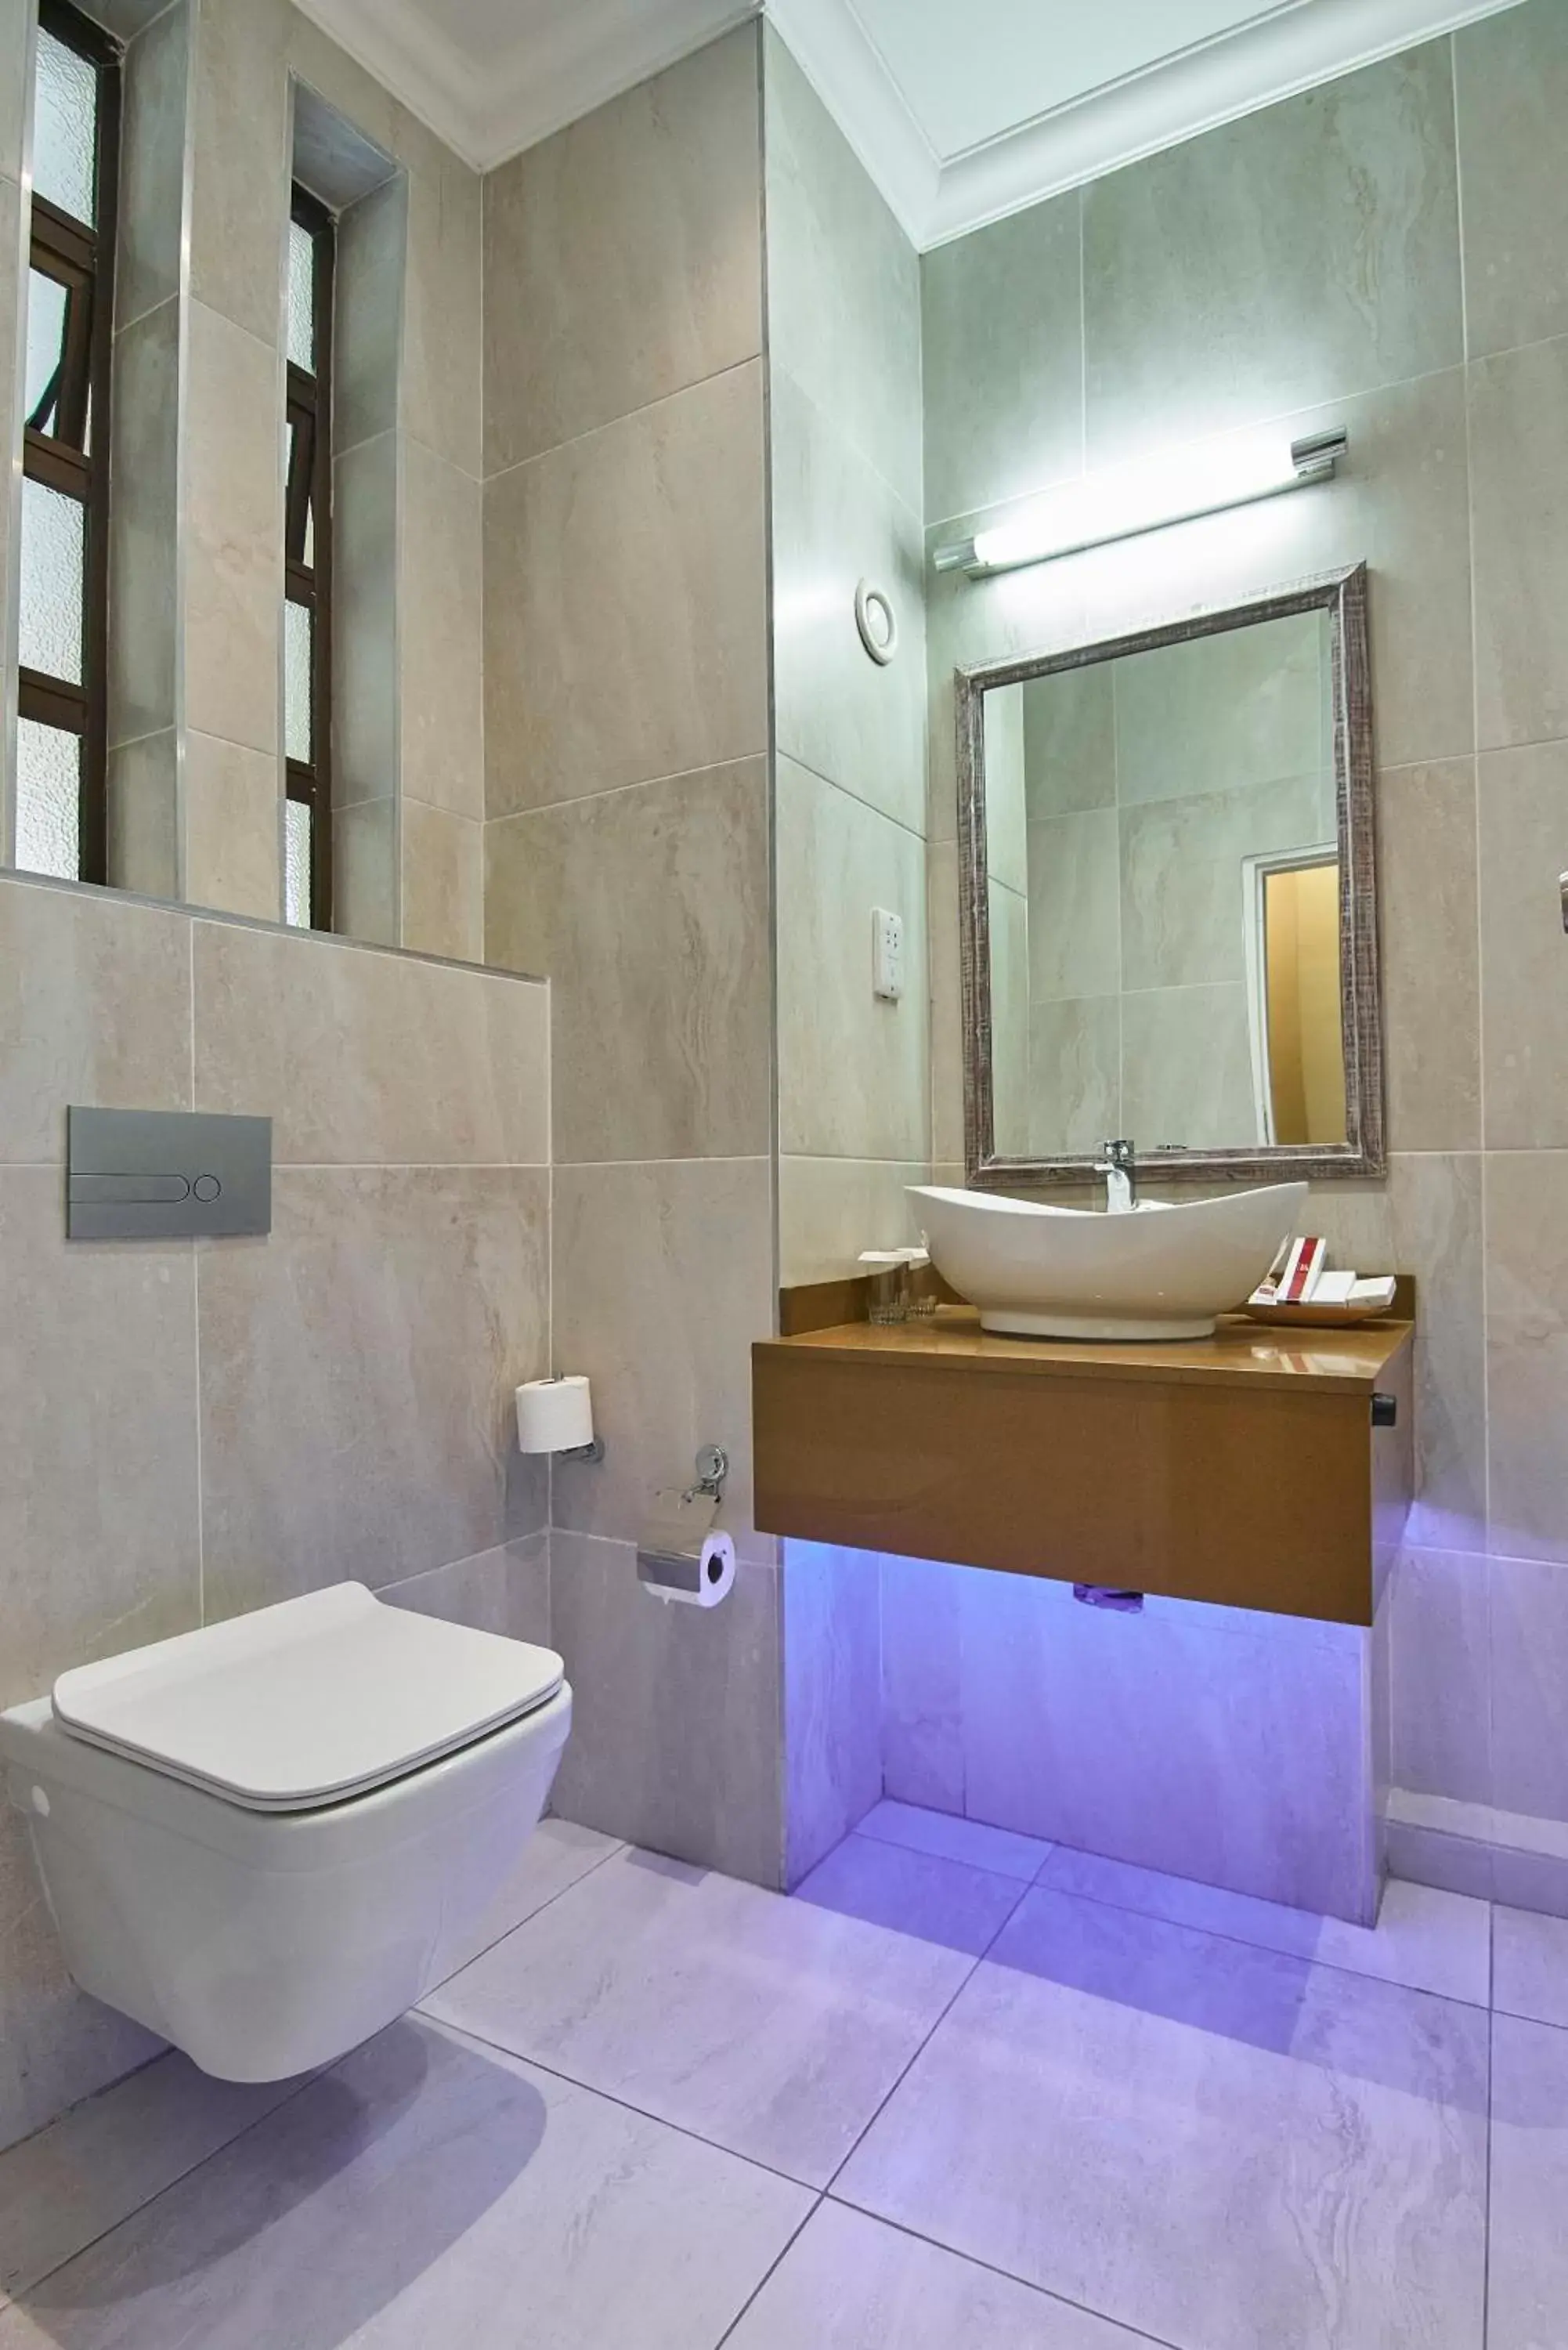 Bathroom in Victoria Falls Rainbow Hotel